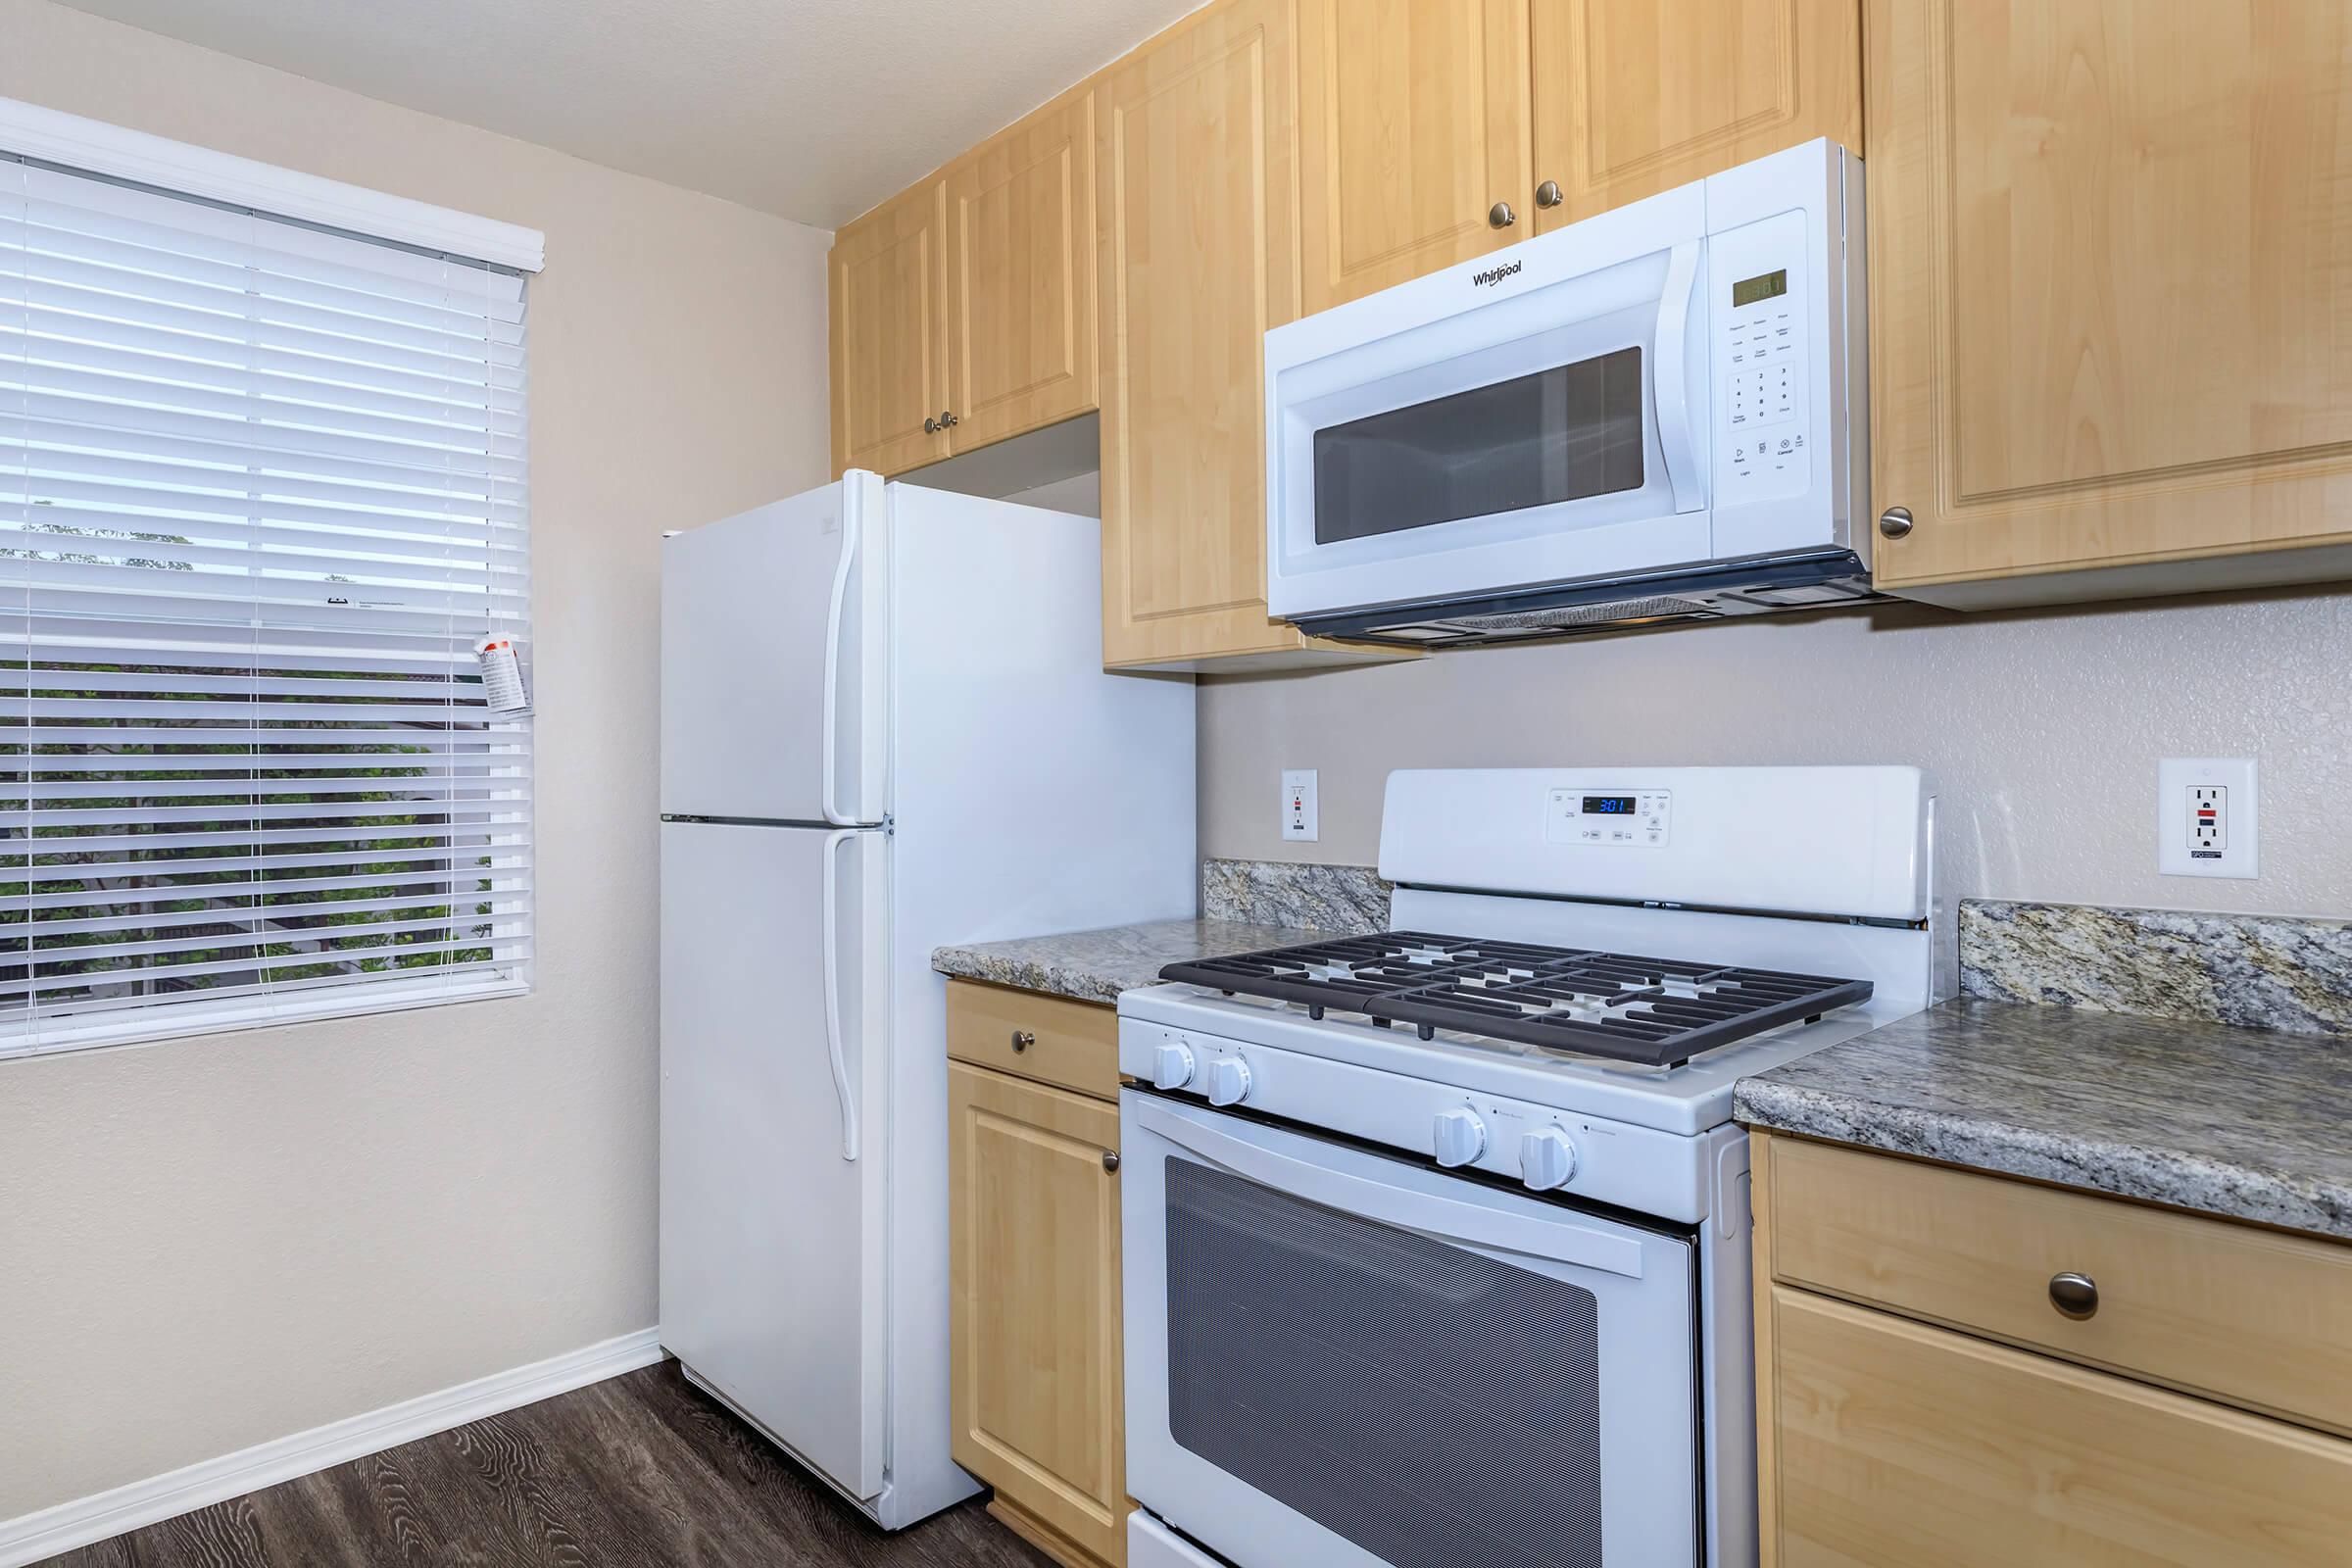 Laurel Glen Apartment Homes has custom cabinetry